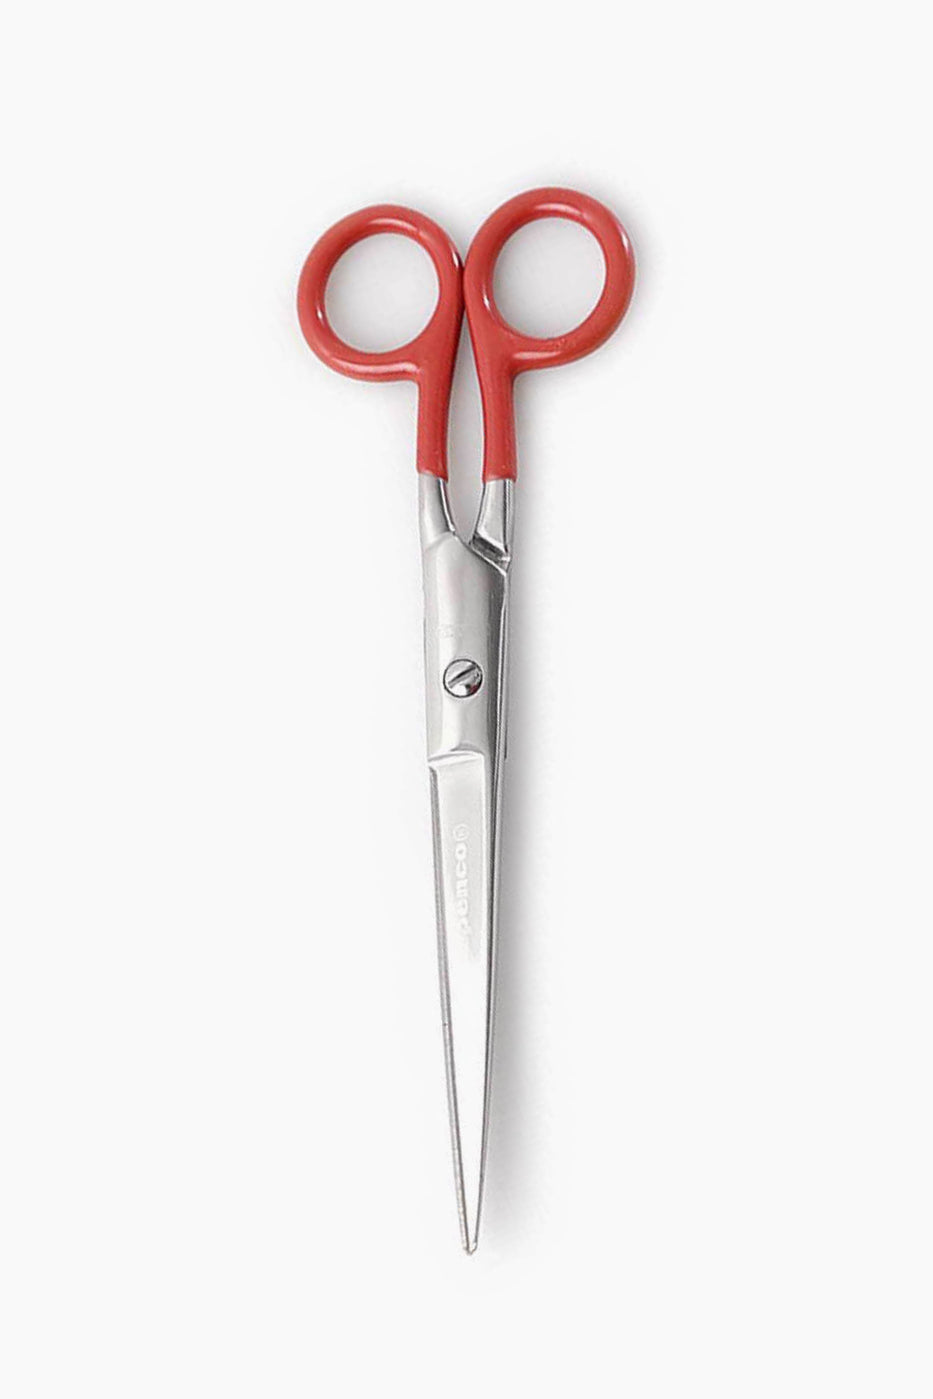 Stainless scissors large red-Penco-KIOSK48TH